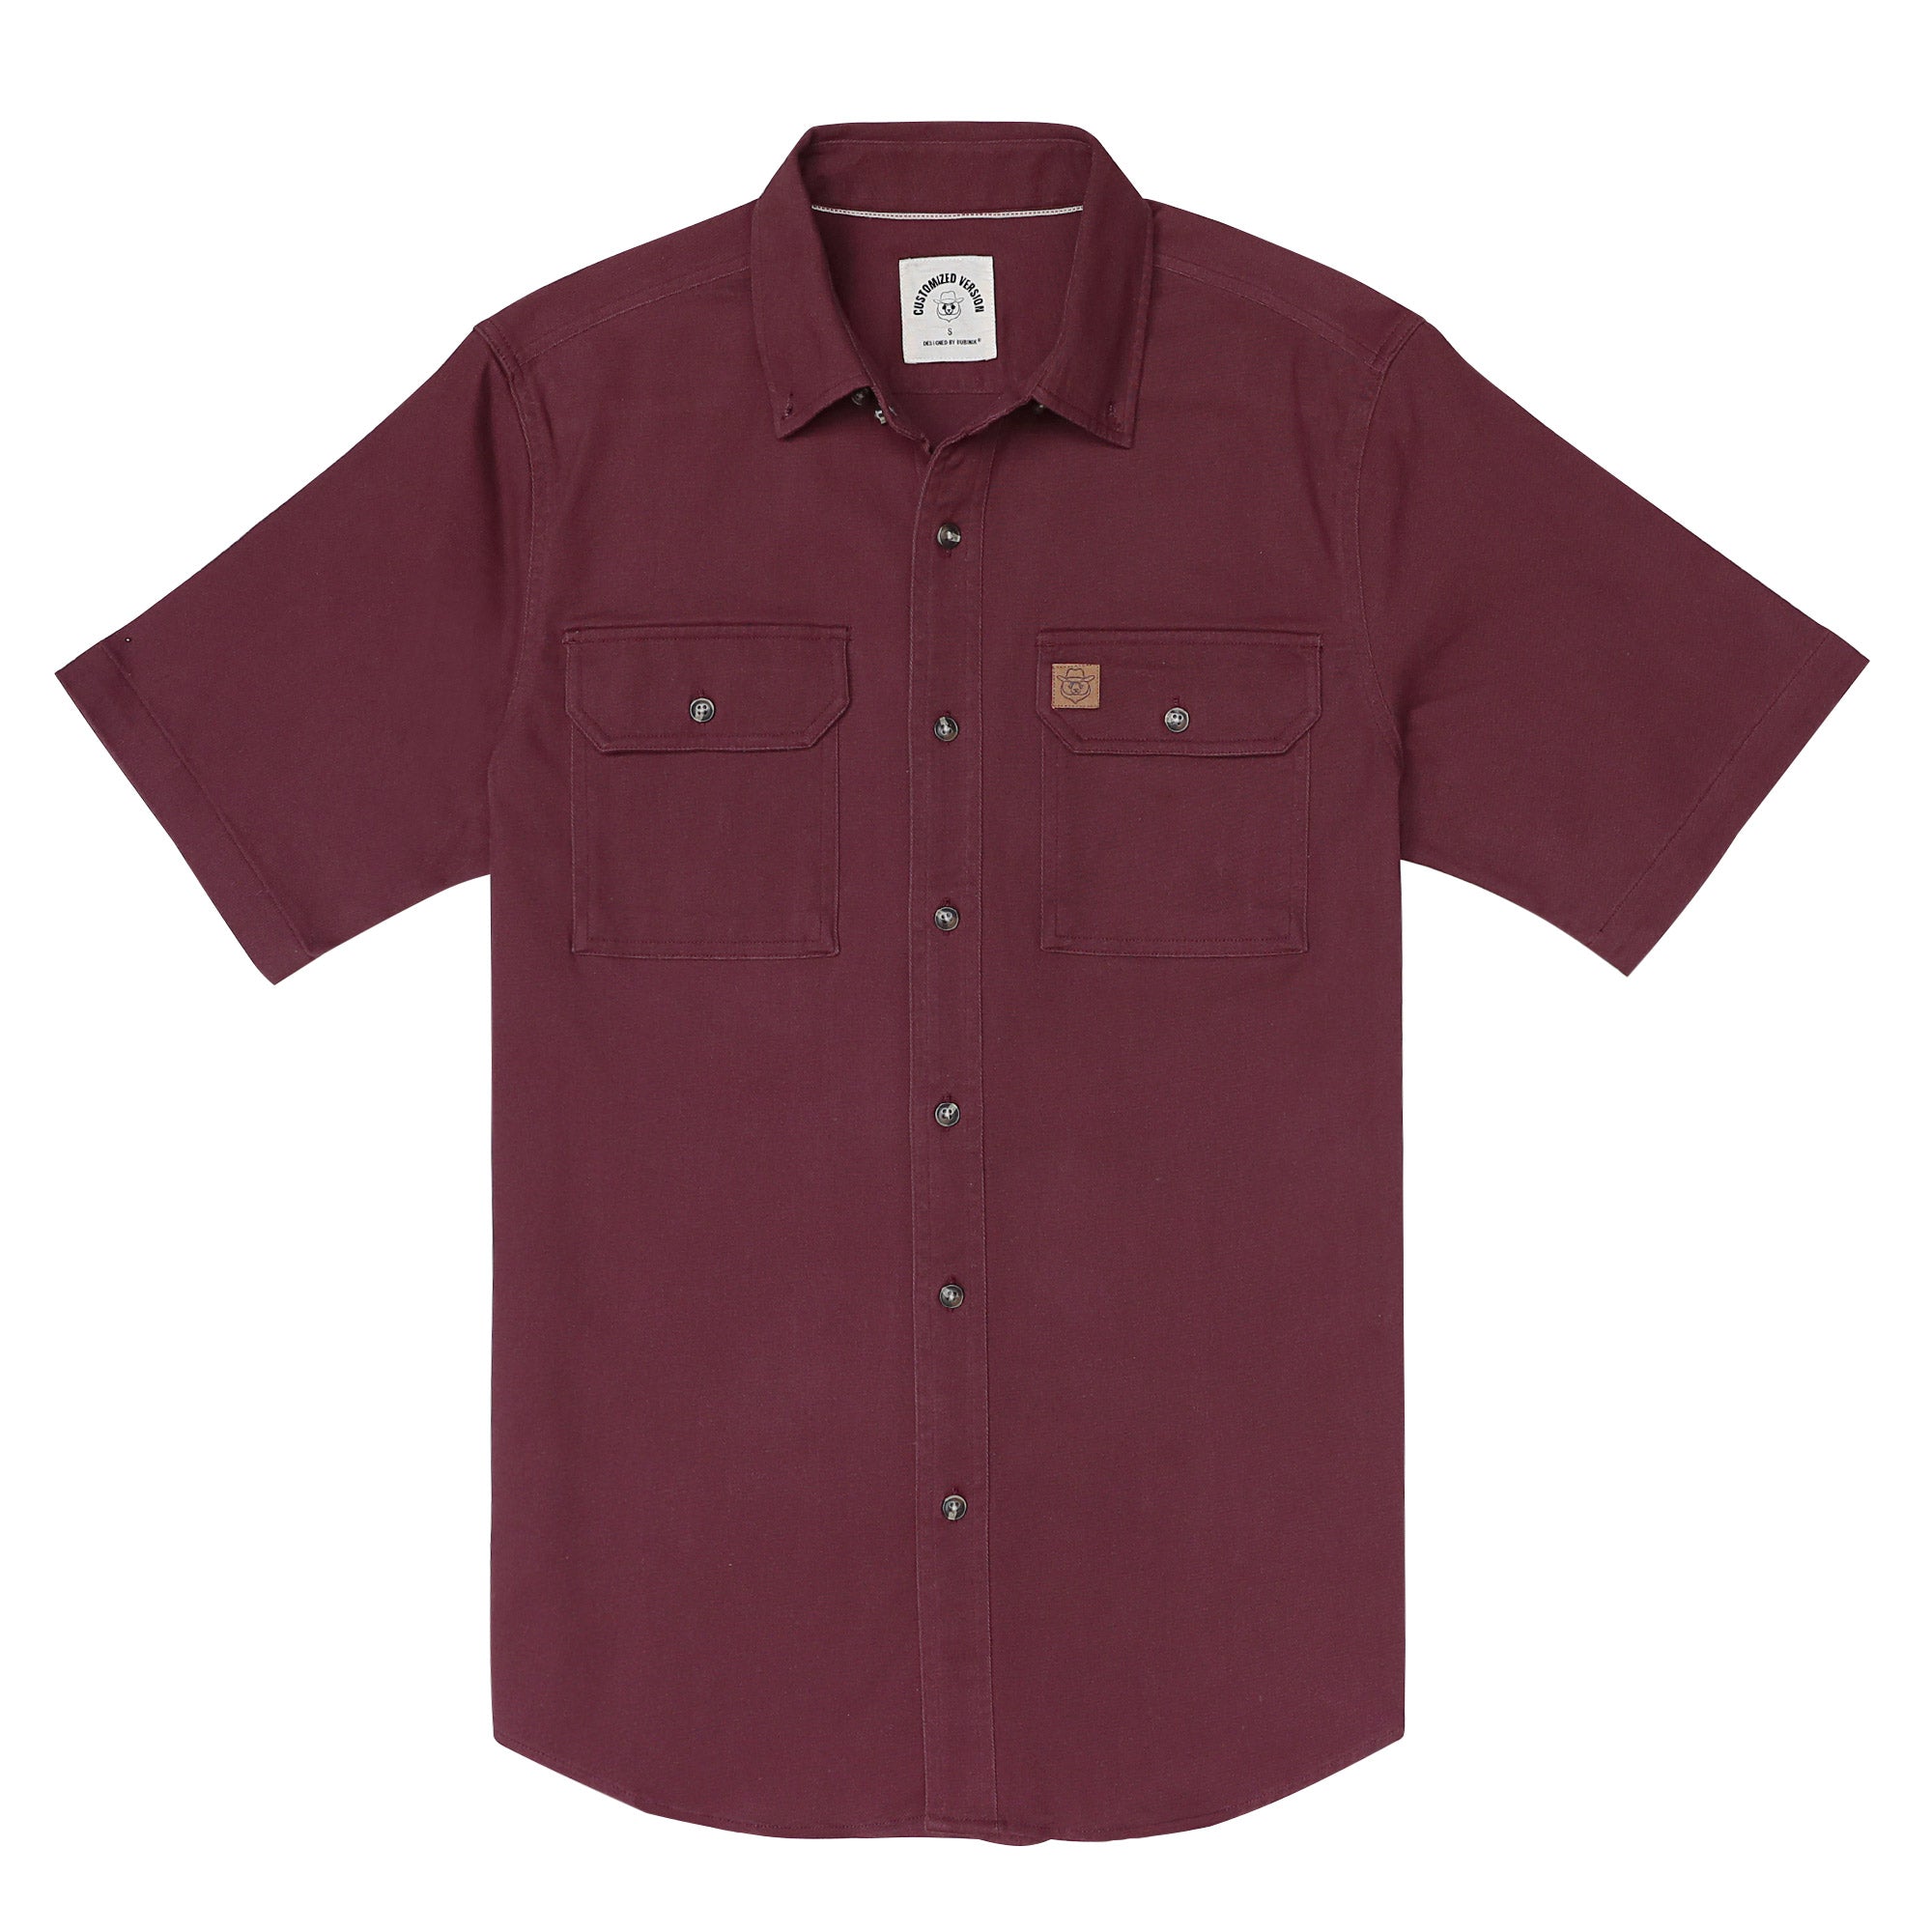 Men's outdoor casual short sleeve shirt #1510